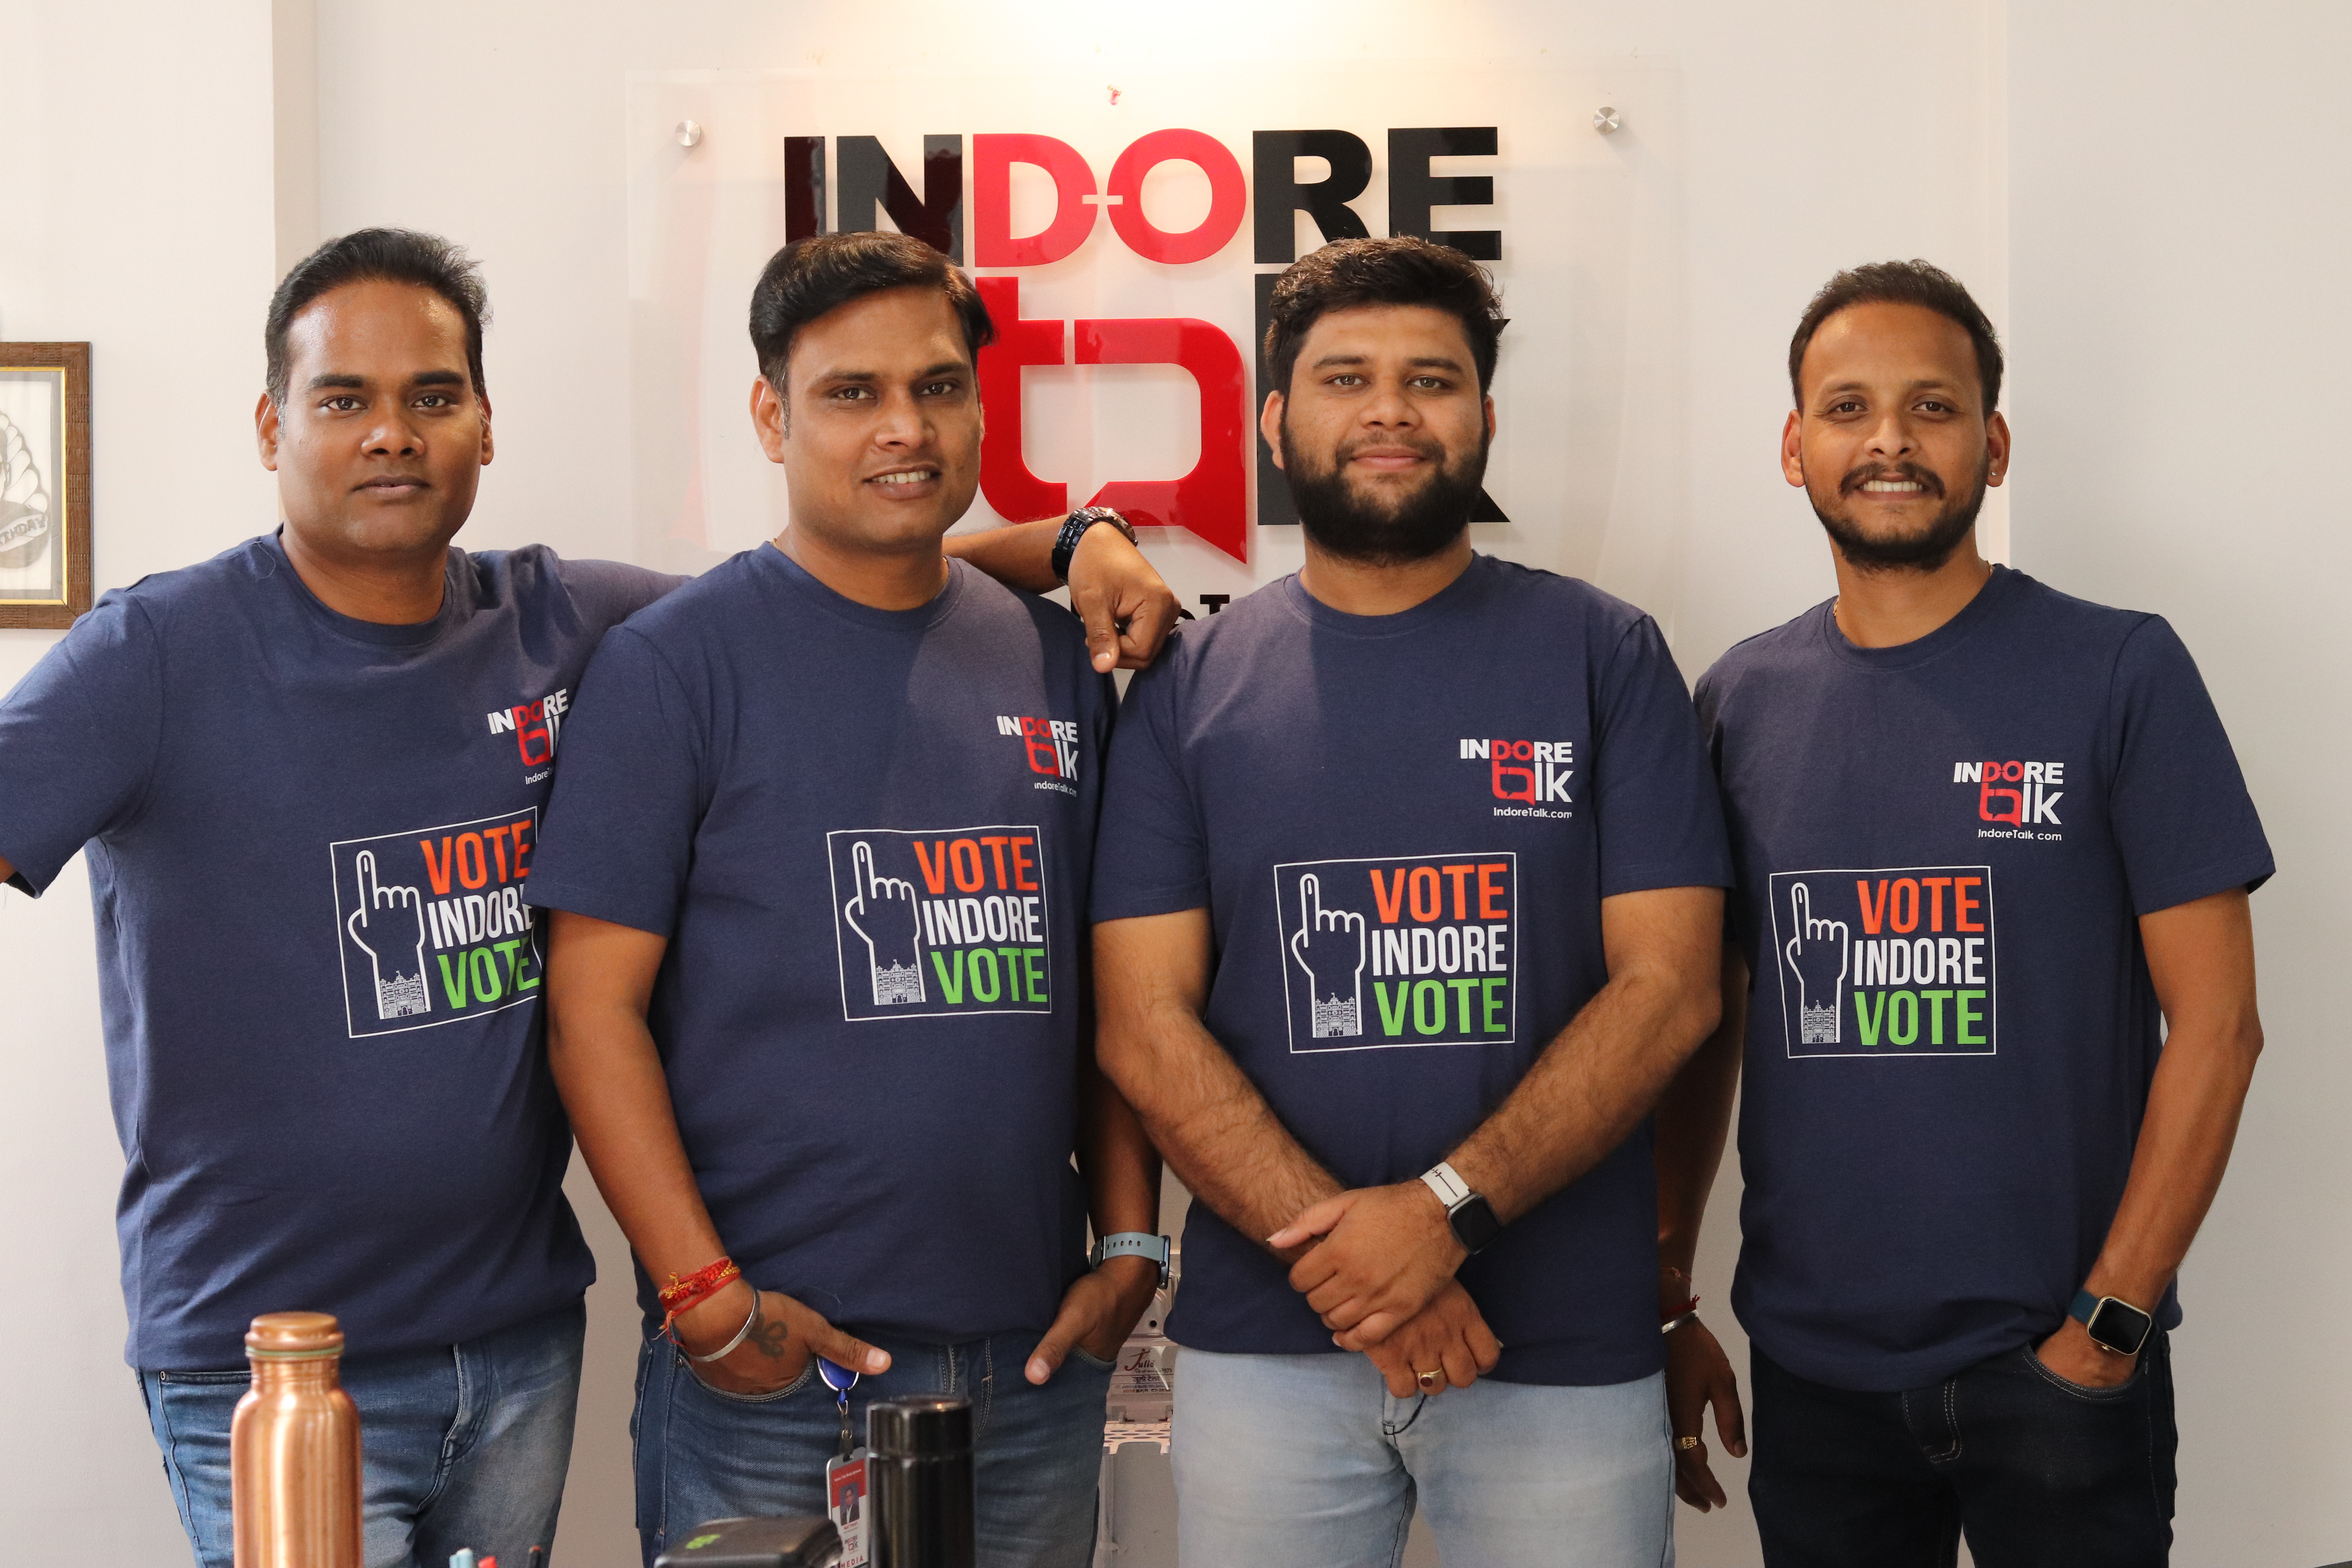 Team Indore Talk Promoting Election Awareness: "Vote Indore Vote".